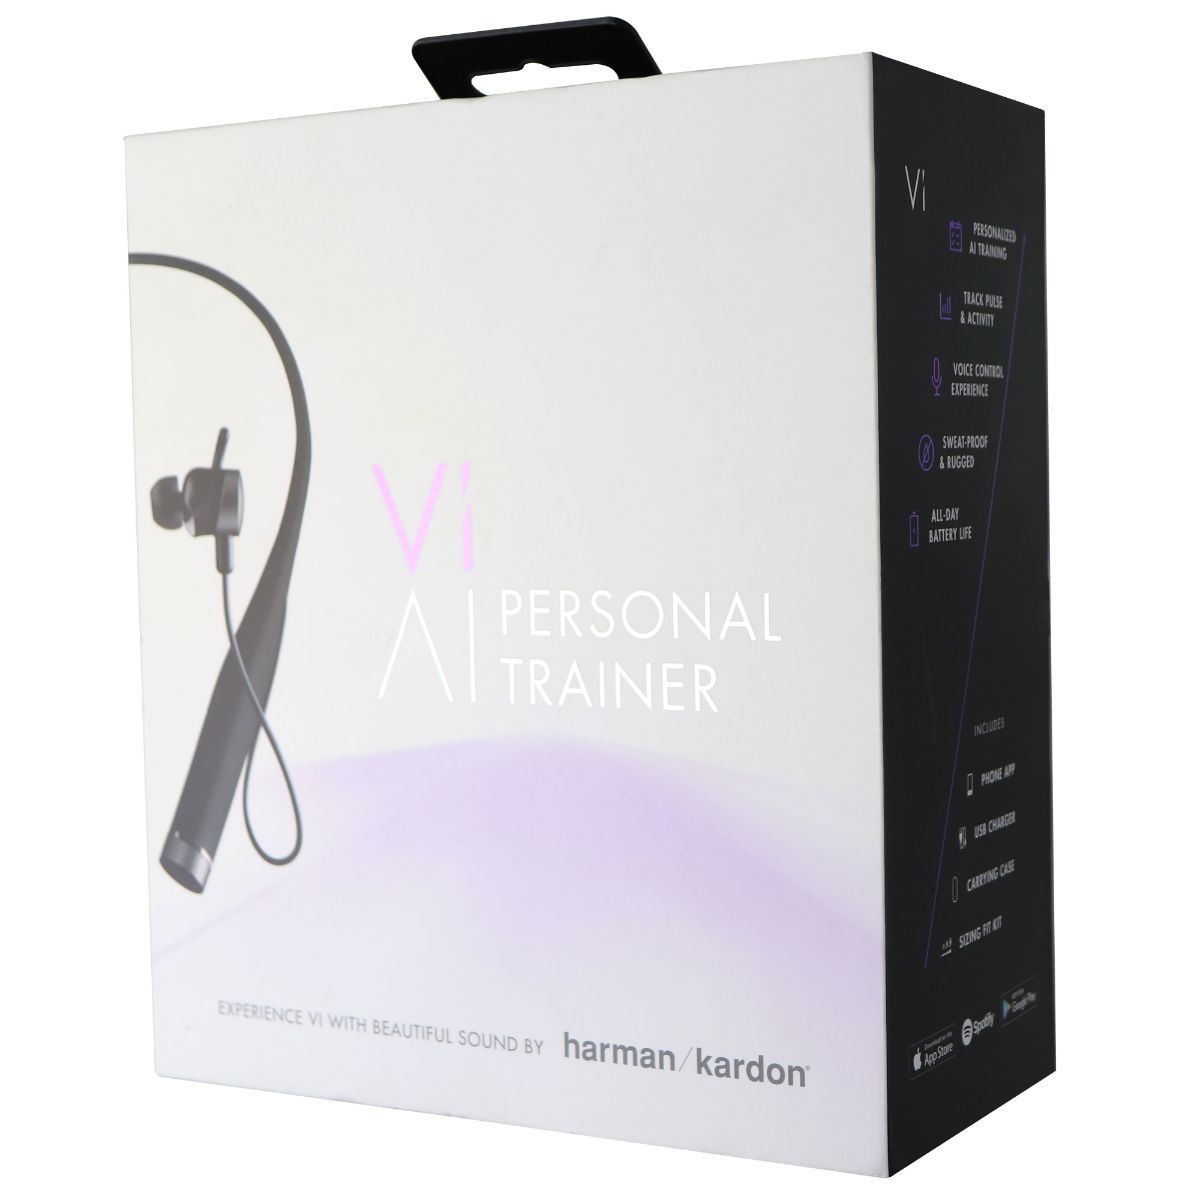 LifeBeam Vi Wireless Neckband Headphones w/ Ai Personal Trainer - Black LBVI001 - image 1 of 7